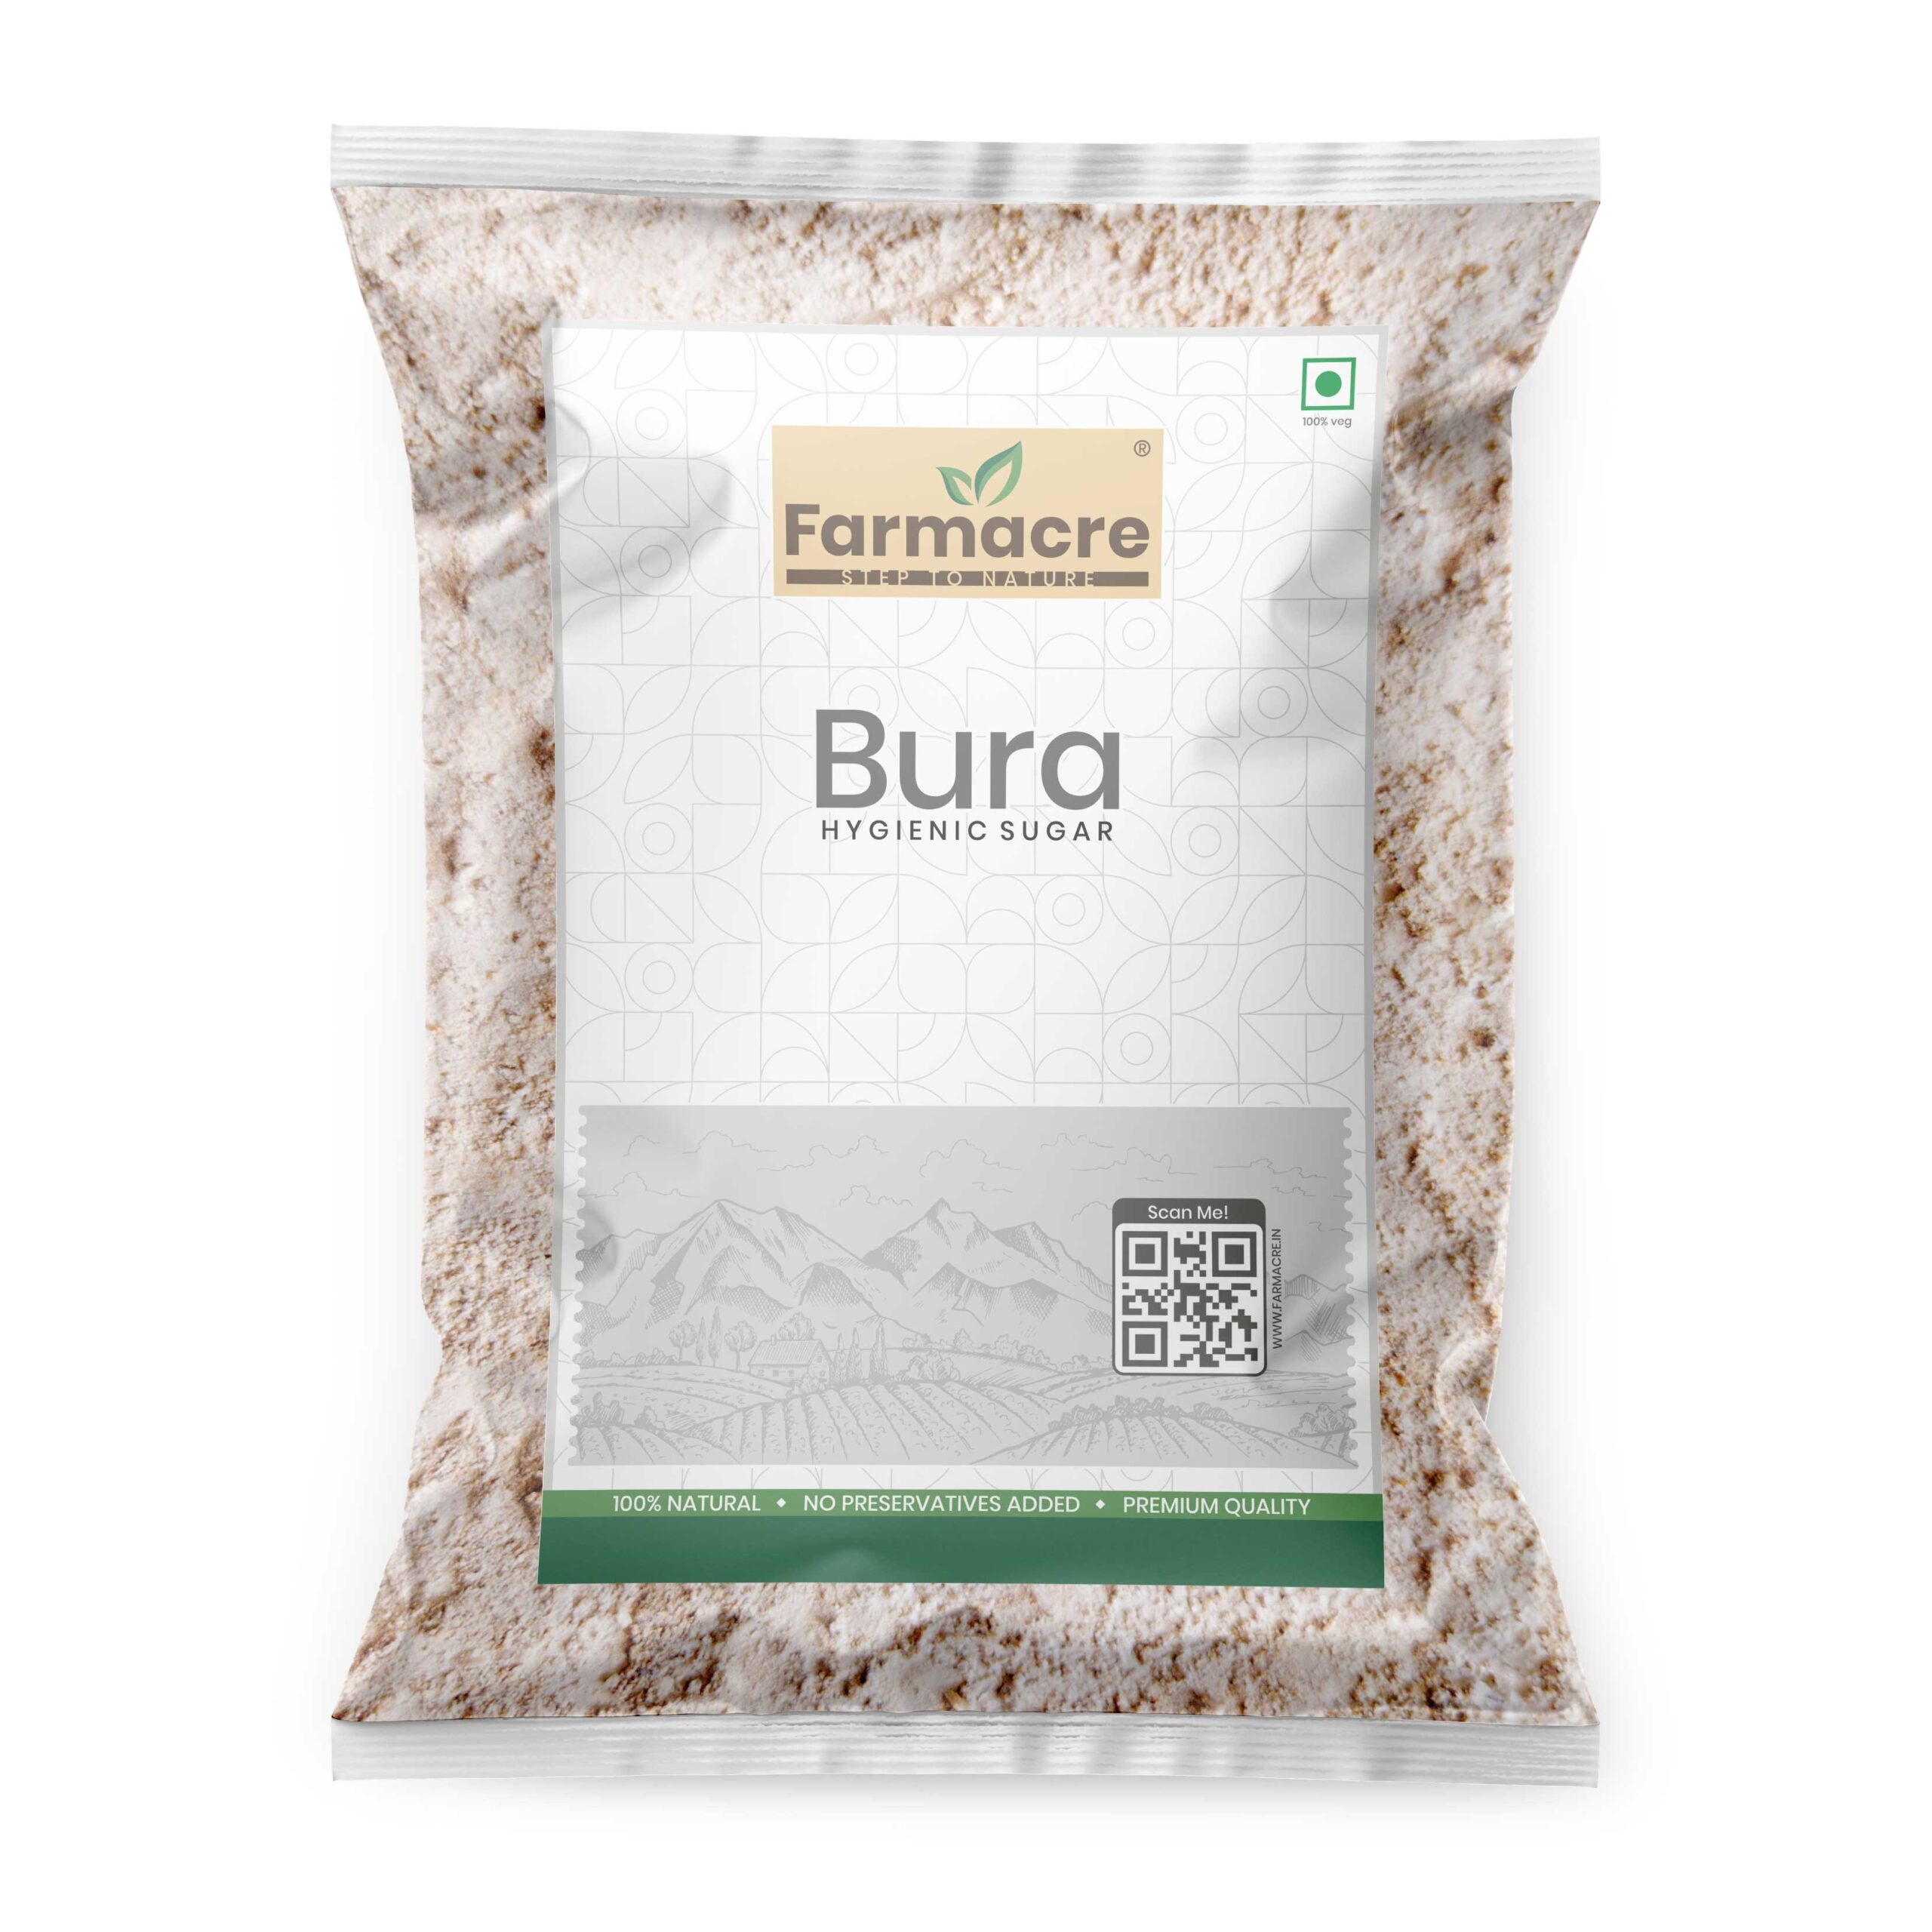 Farmacre Bura - Hygienic Sugar